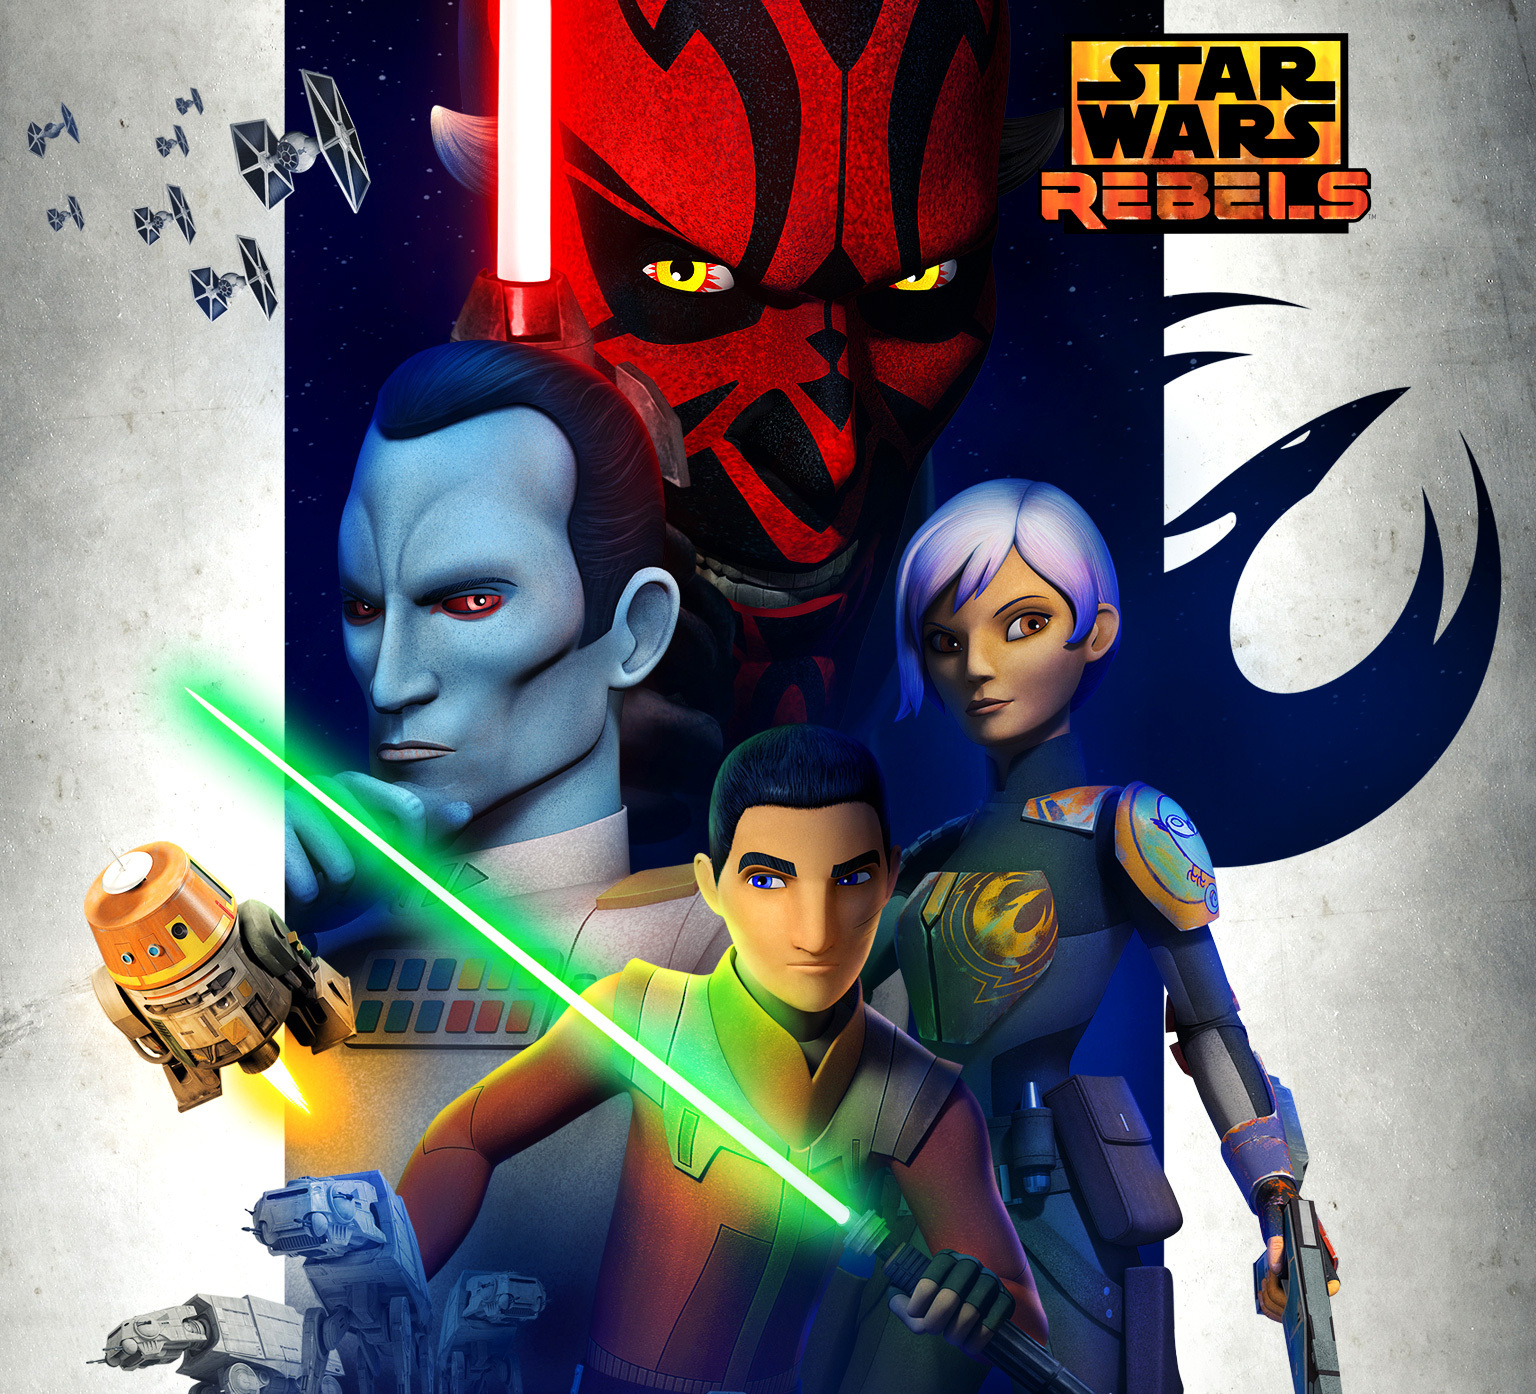 Star Wars Rebels #9